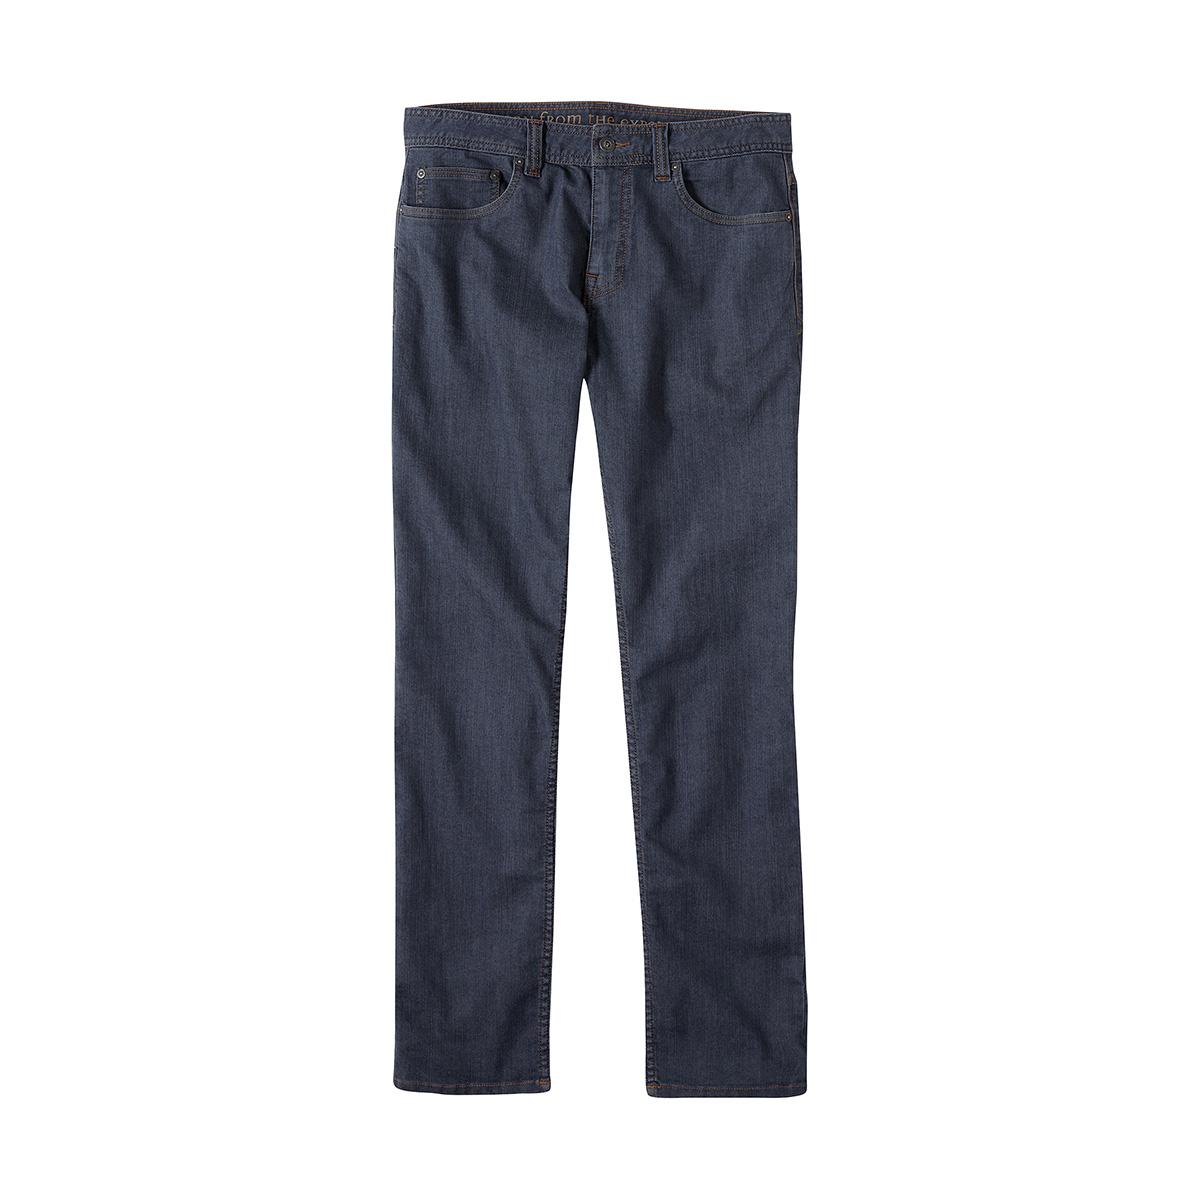  Men's Bridger Jeans - 32 Inch